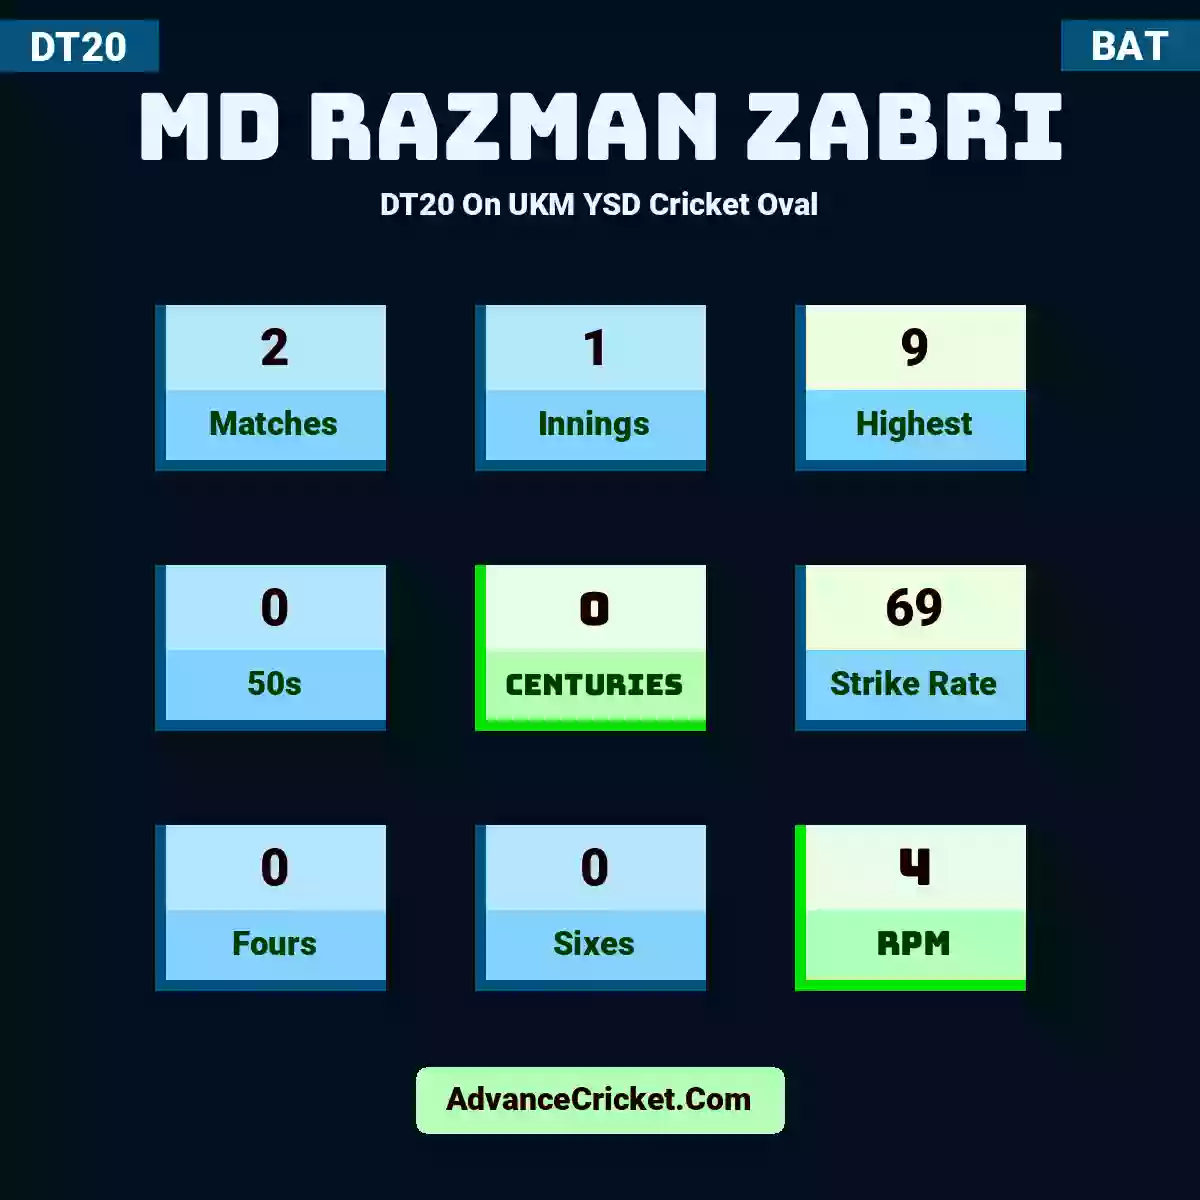 Md Razman Zabri DT20  On UKM YSD Cricket Oval, Md Razman Zabri played 2 matches, scored 9 runs as highest, 0 half-centuries, and 0 centuries, with a strike rate of 69. M.Razman.Zabri hit 0 fours and 0 sixes, with an RPM of 4.